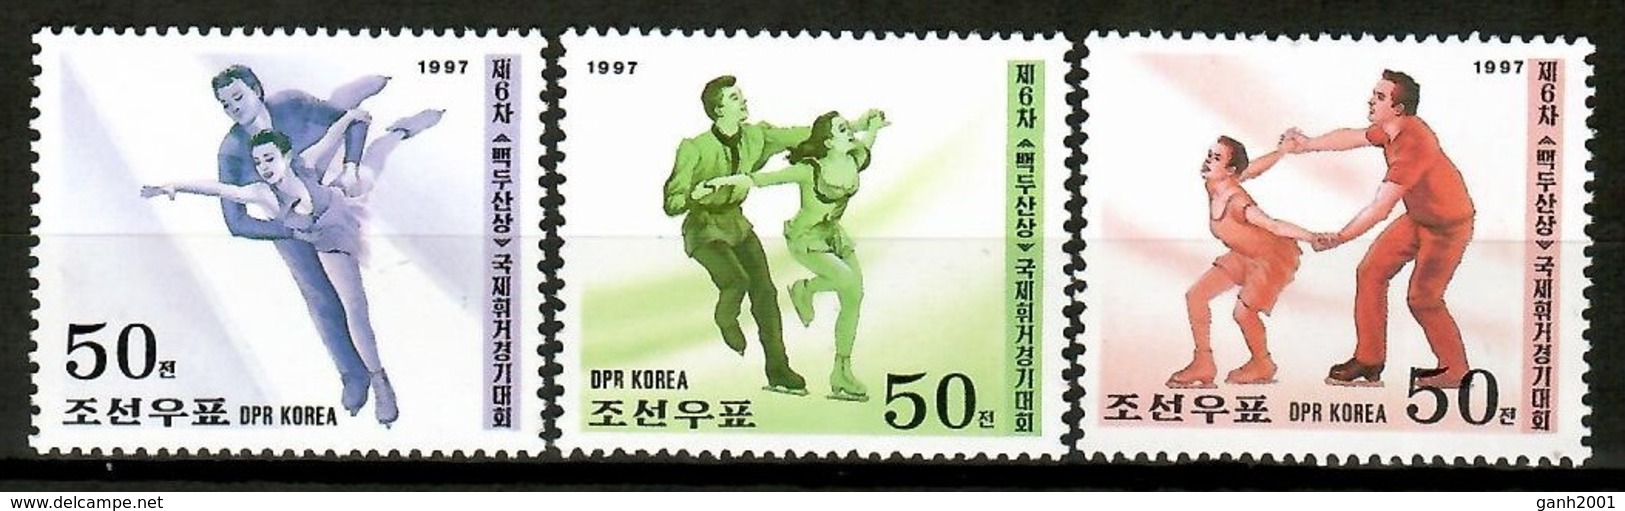 Korea North 1997 Corea / Figure Skating MNH Patinaje Artístico / Cu12911  34-13 - Patinaje Artístico